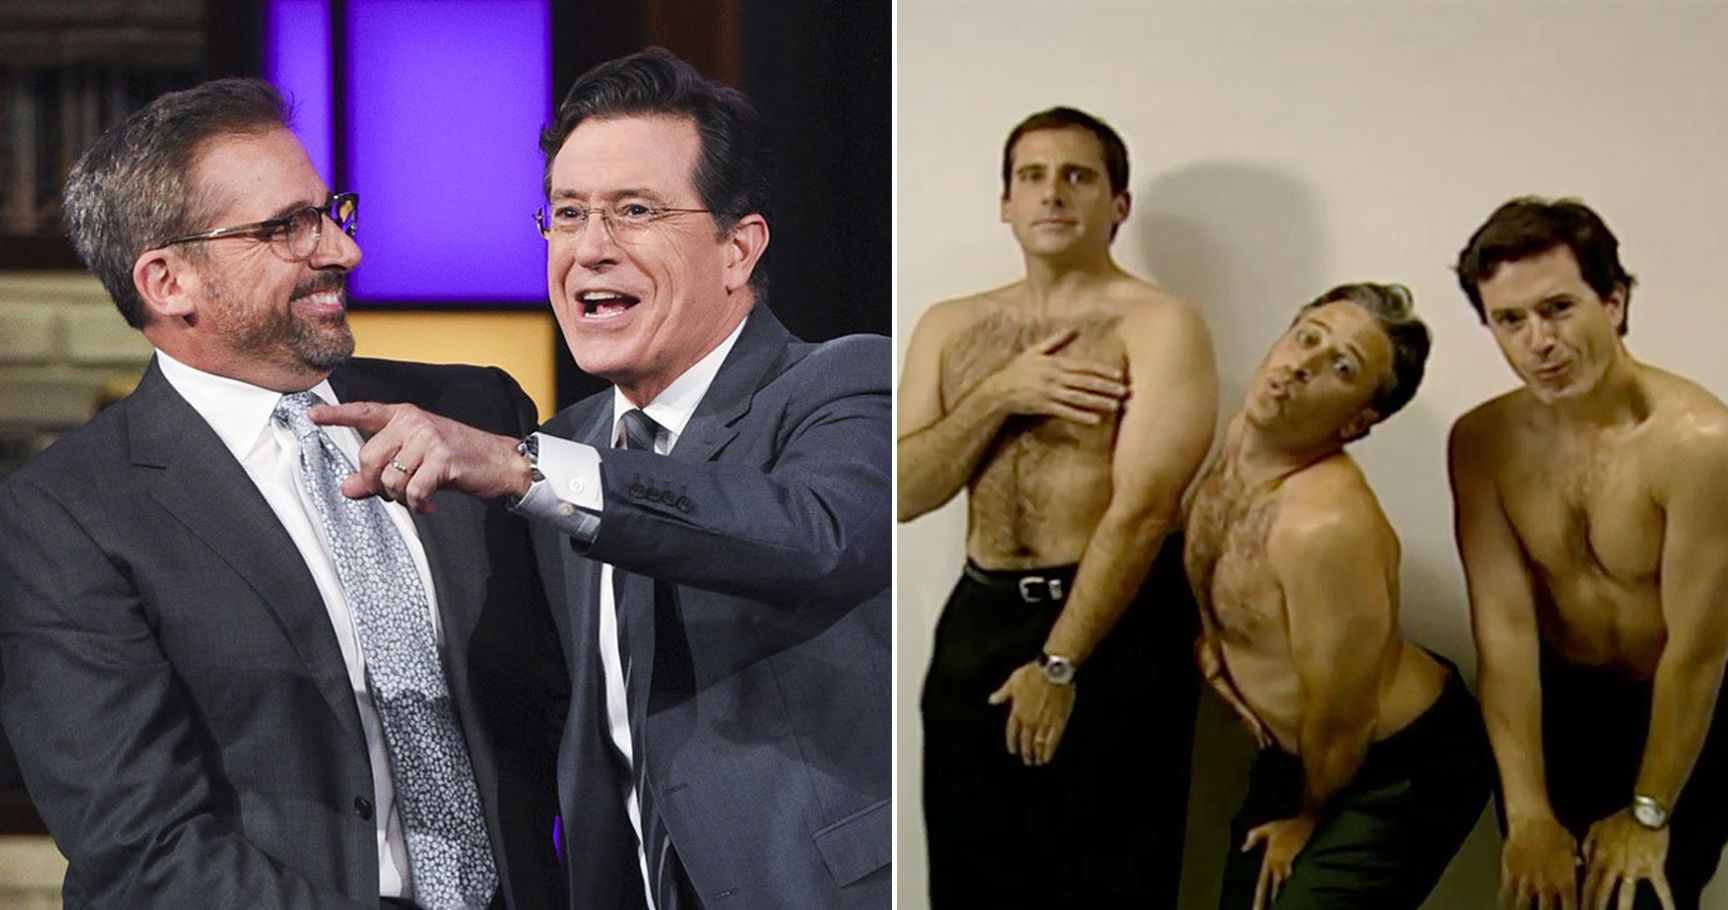 Stephen Colbert Gay Rights.